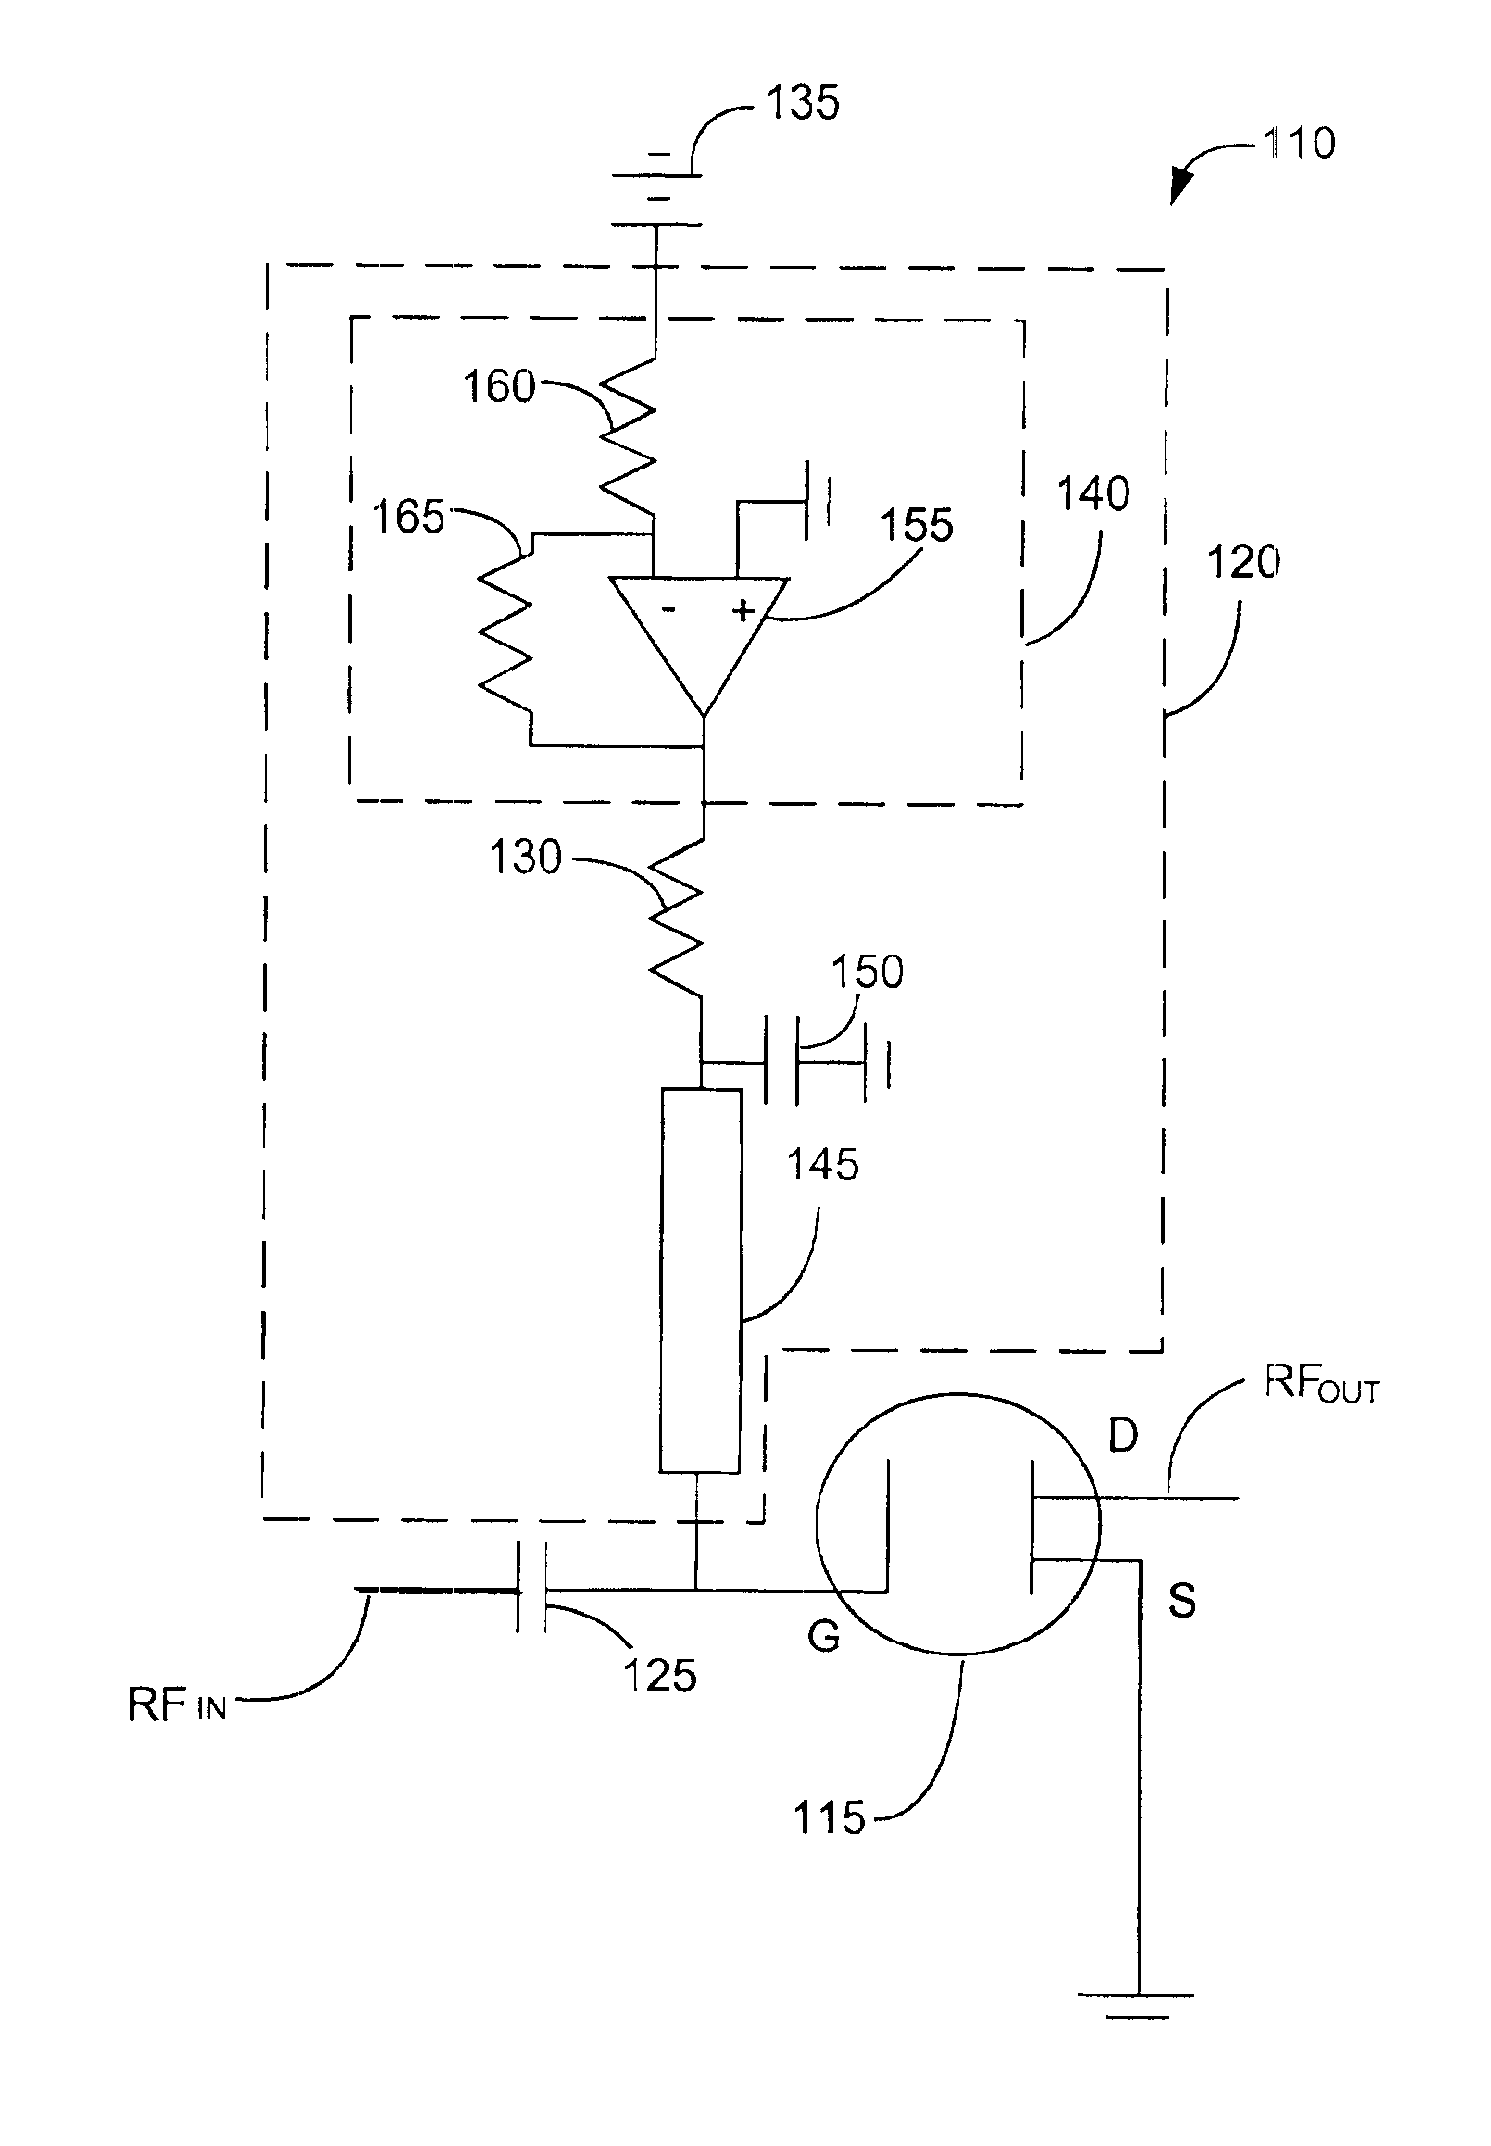 Active element bias circuit for RF power transistor input